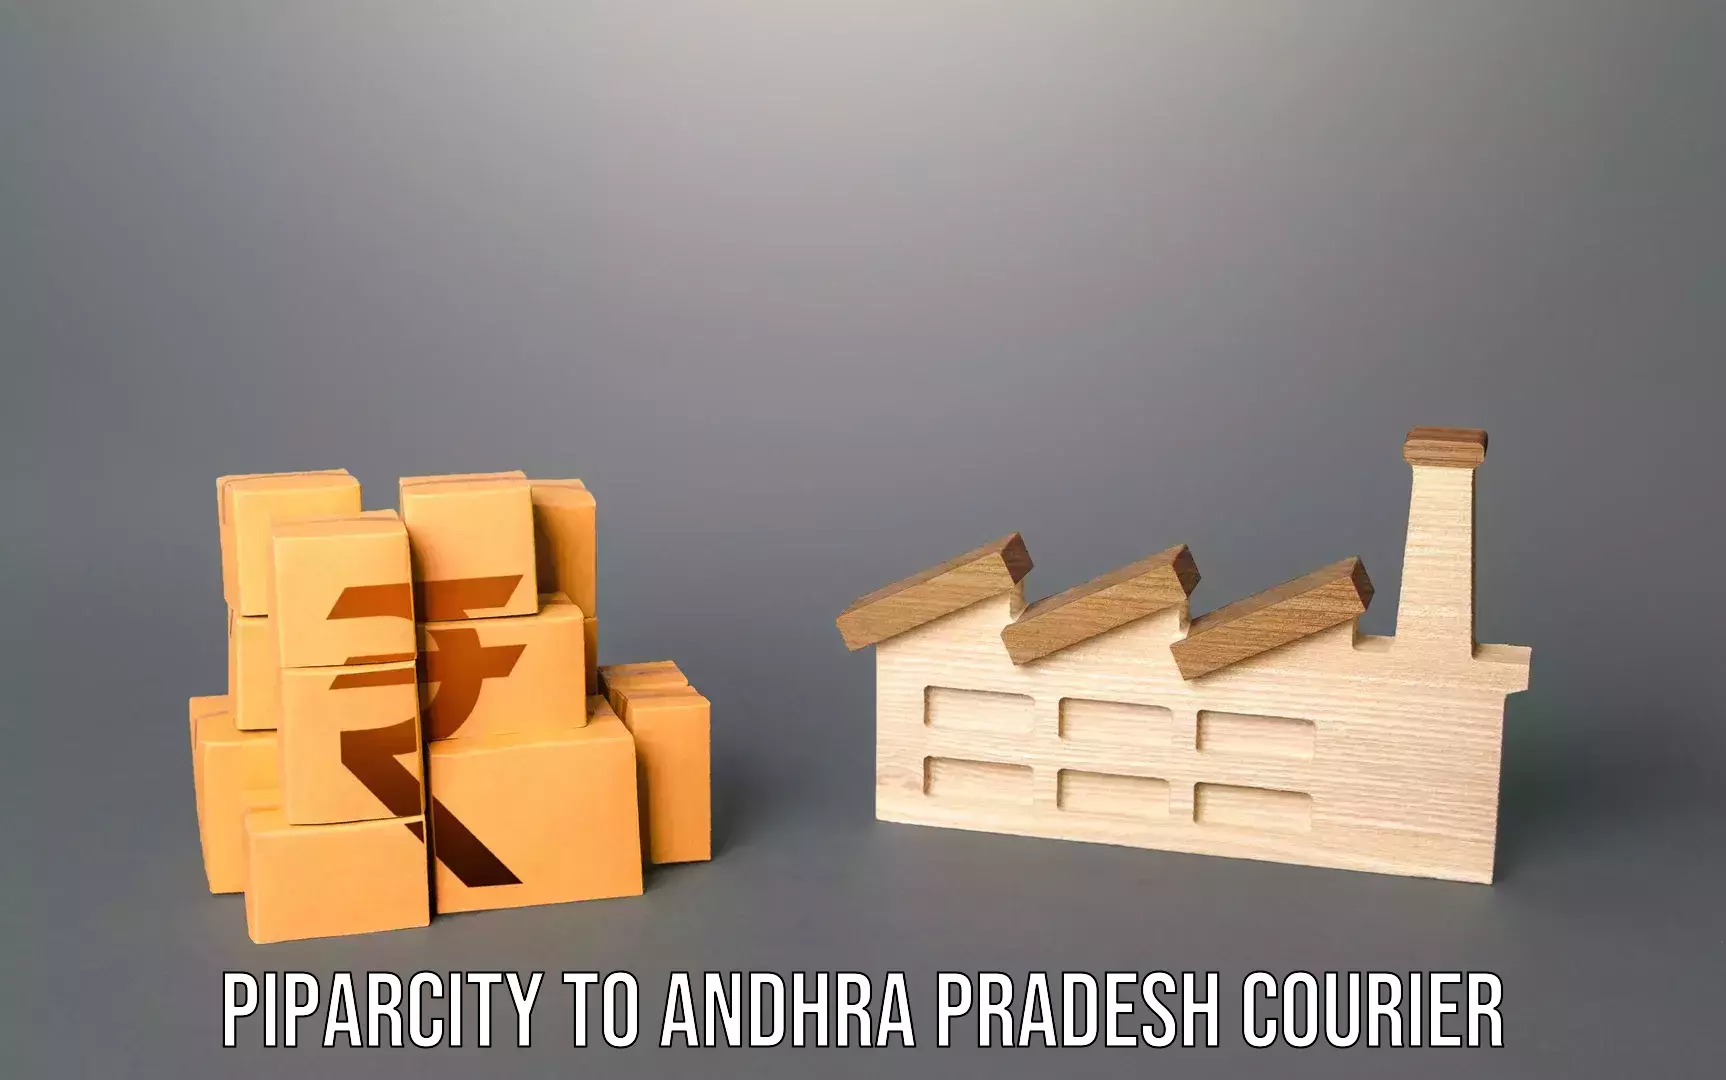 Emergency baggage service Piparcity to Andhra Pradesh